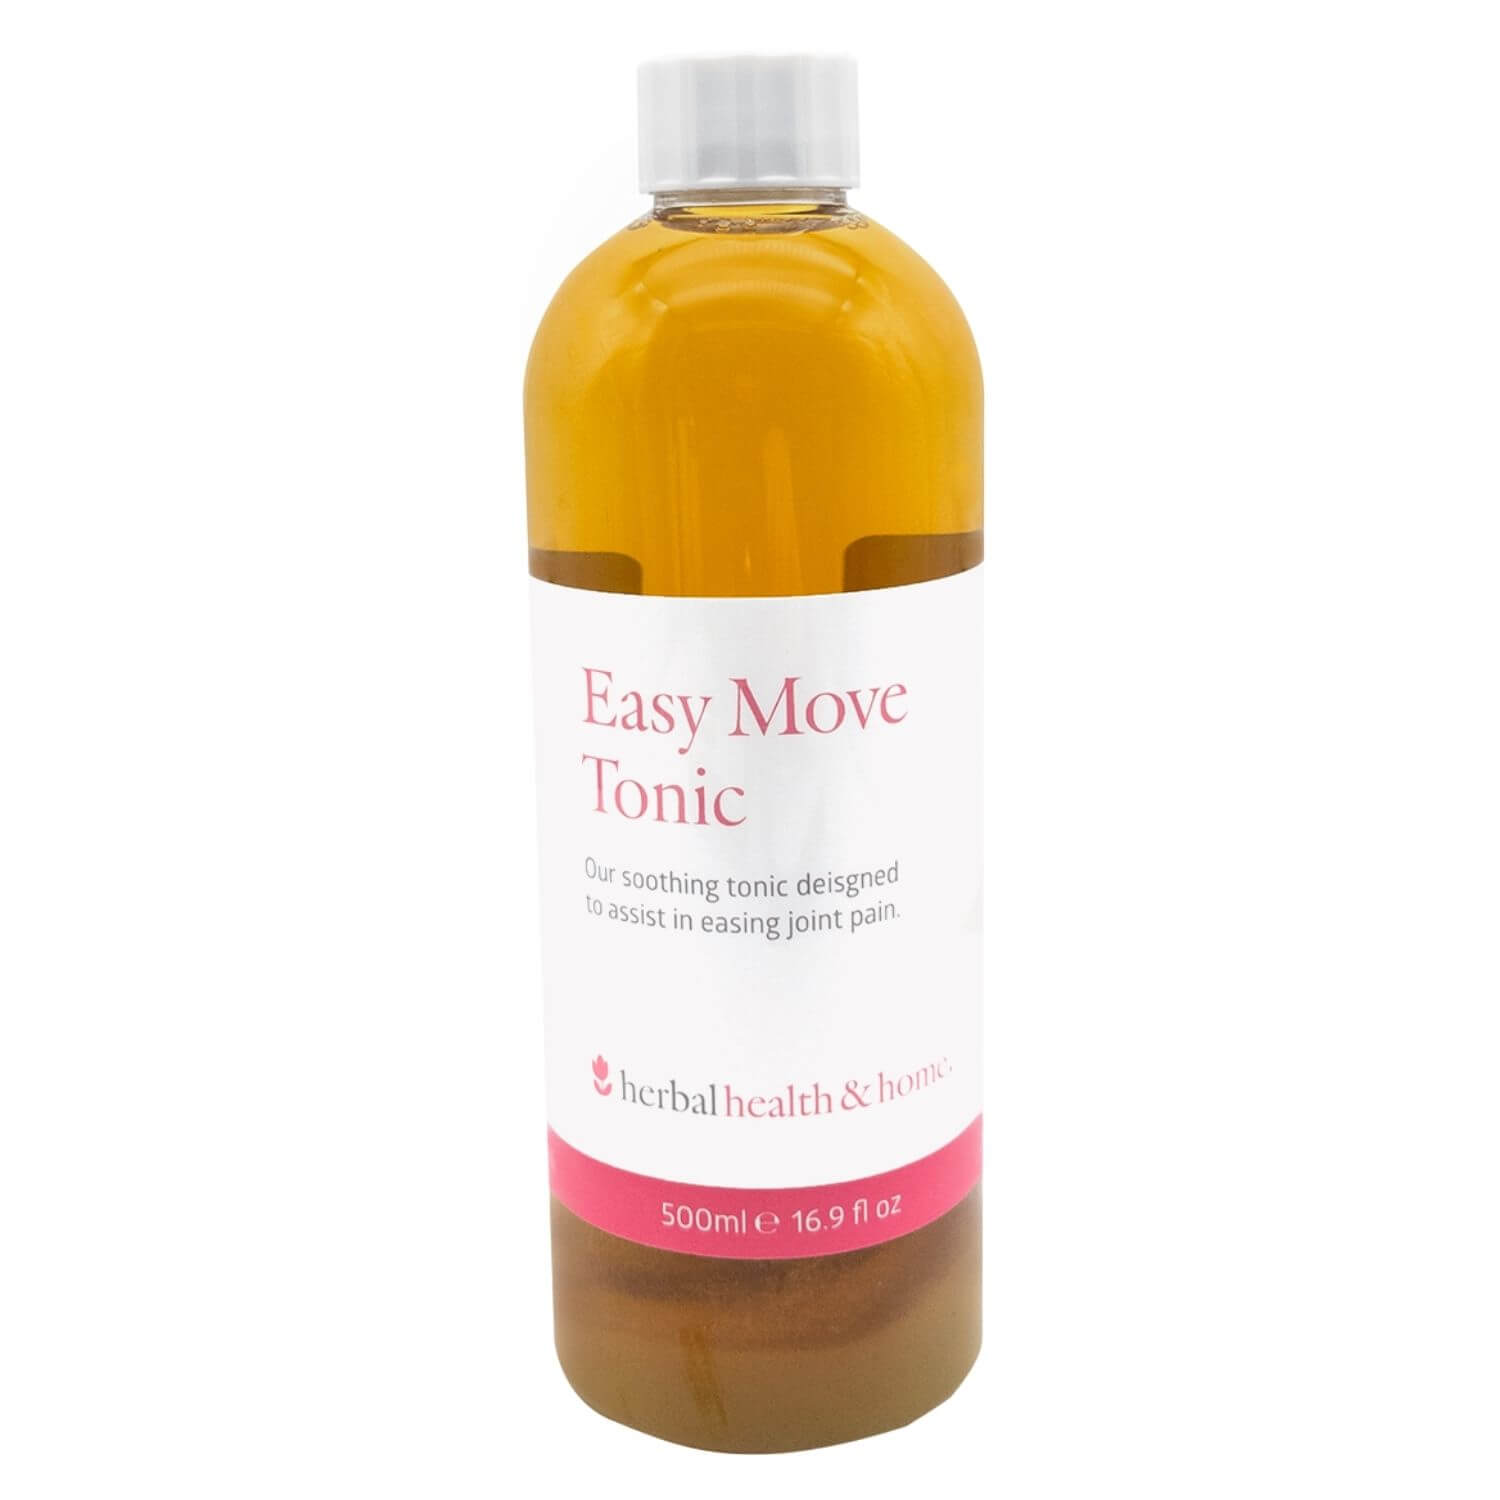 Easy Move Tonic | Herbal, Health & Home